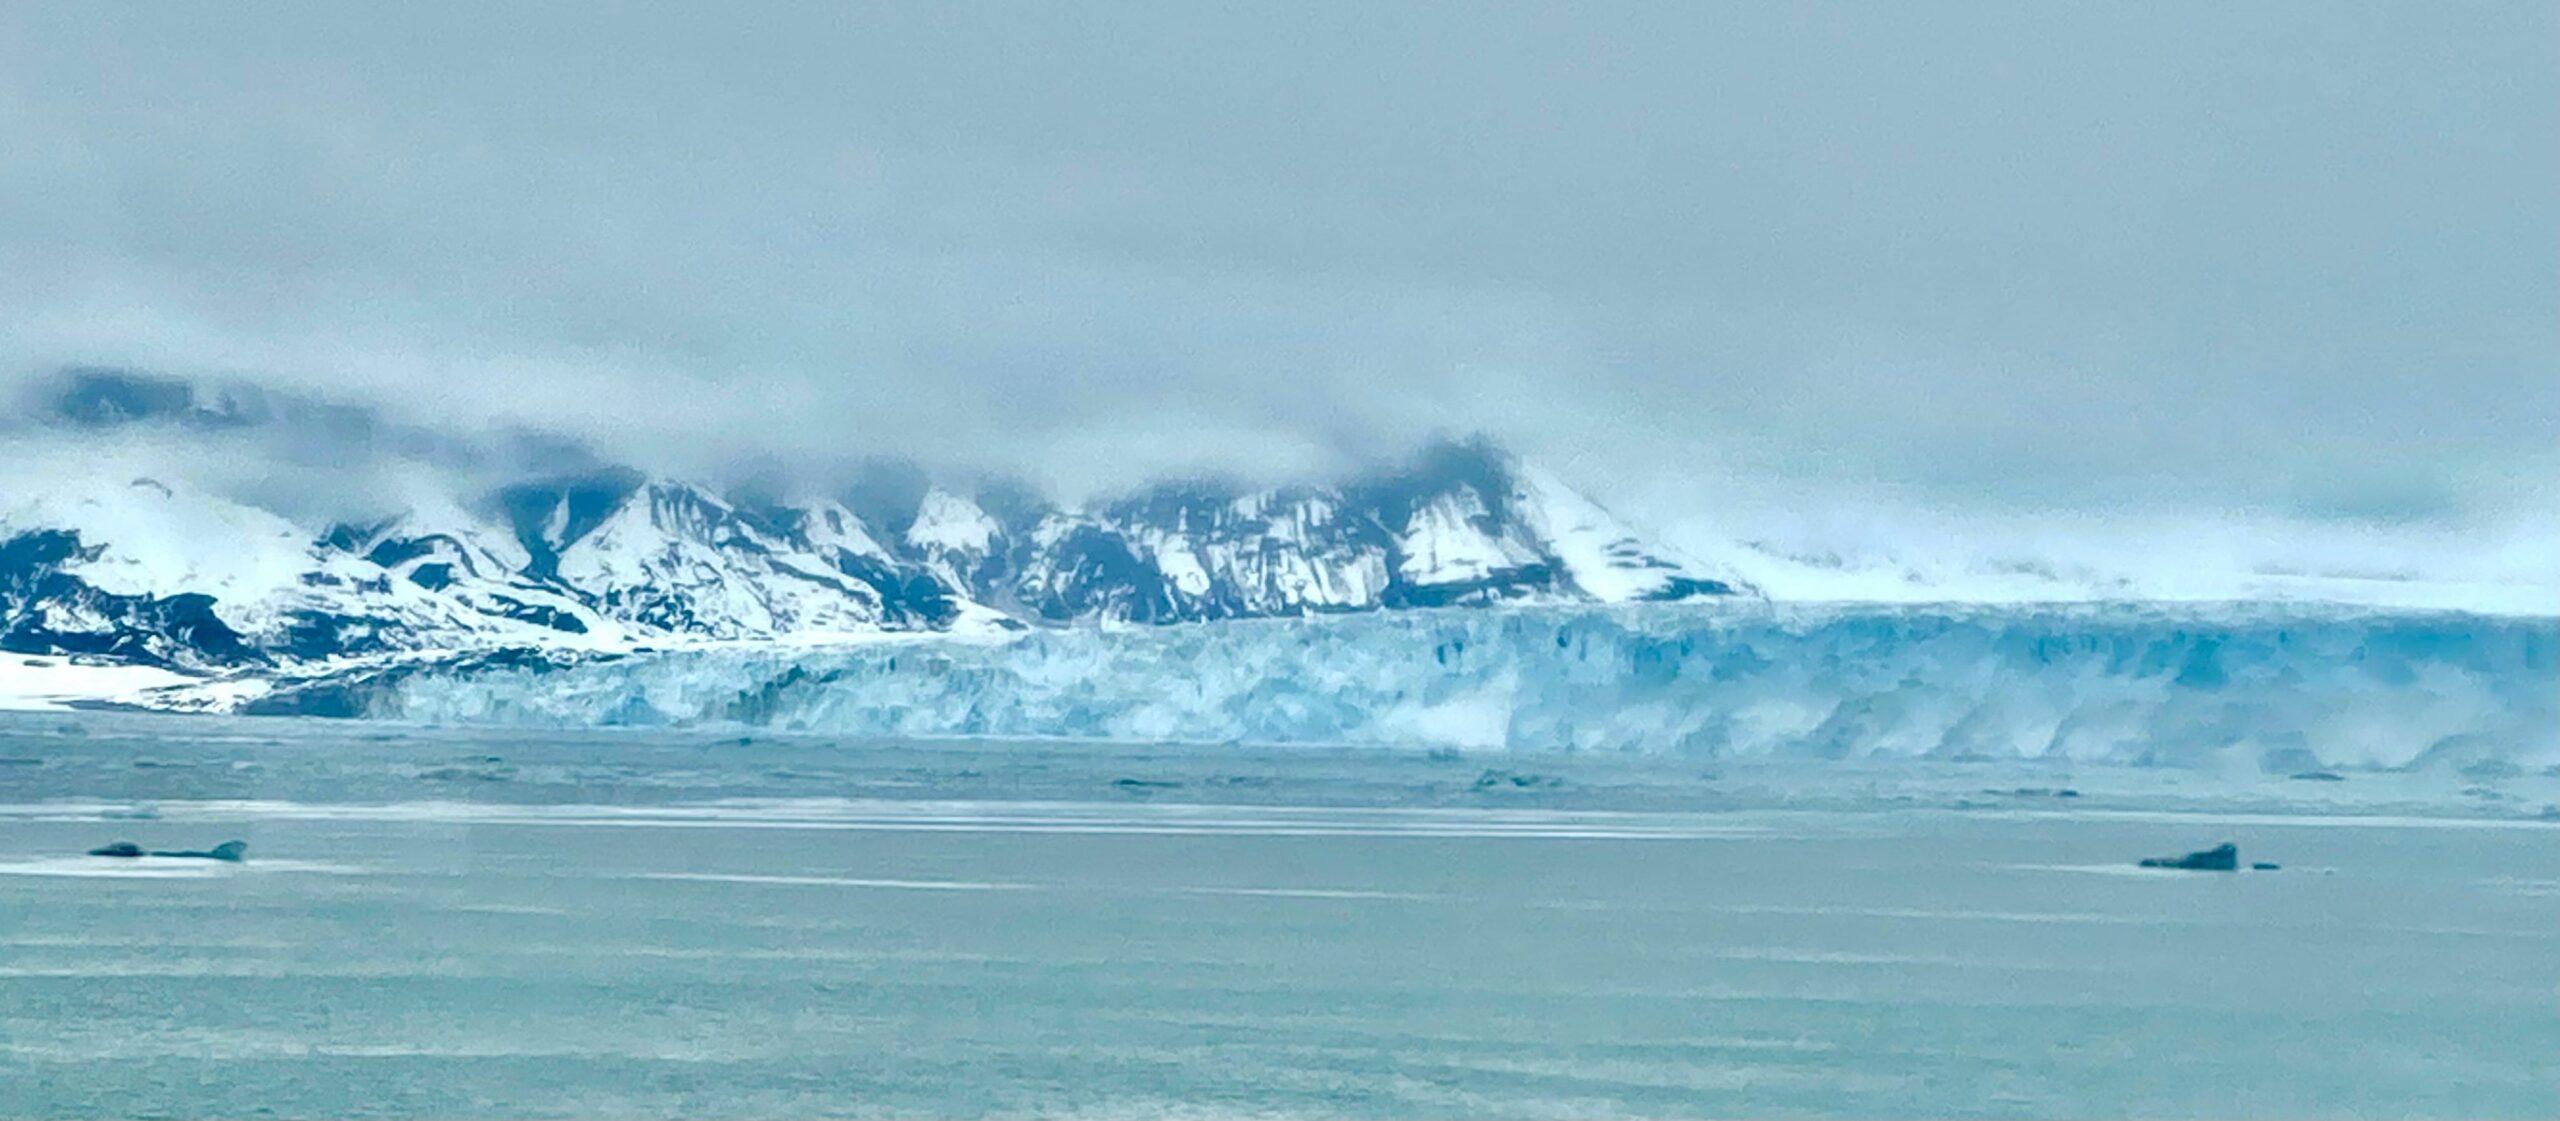 An image of Alaska's Hubbard Glacier.